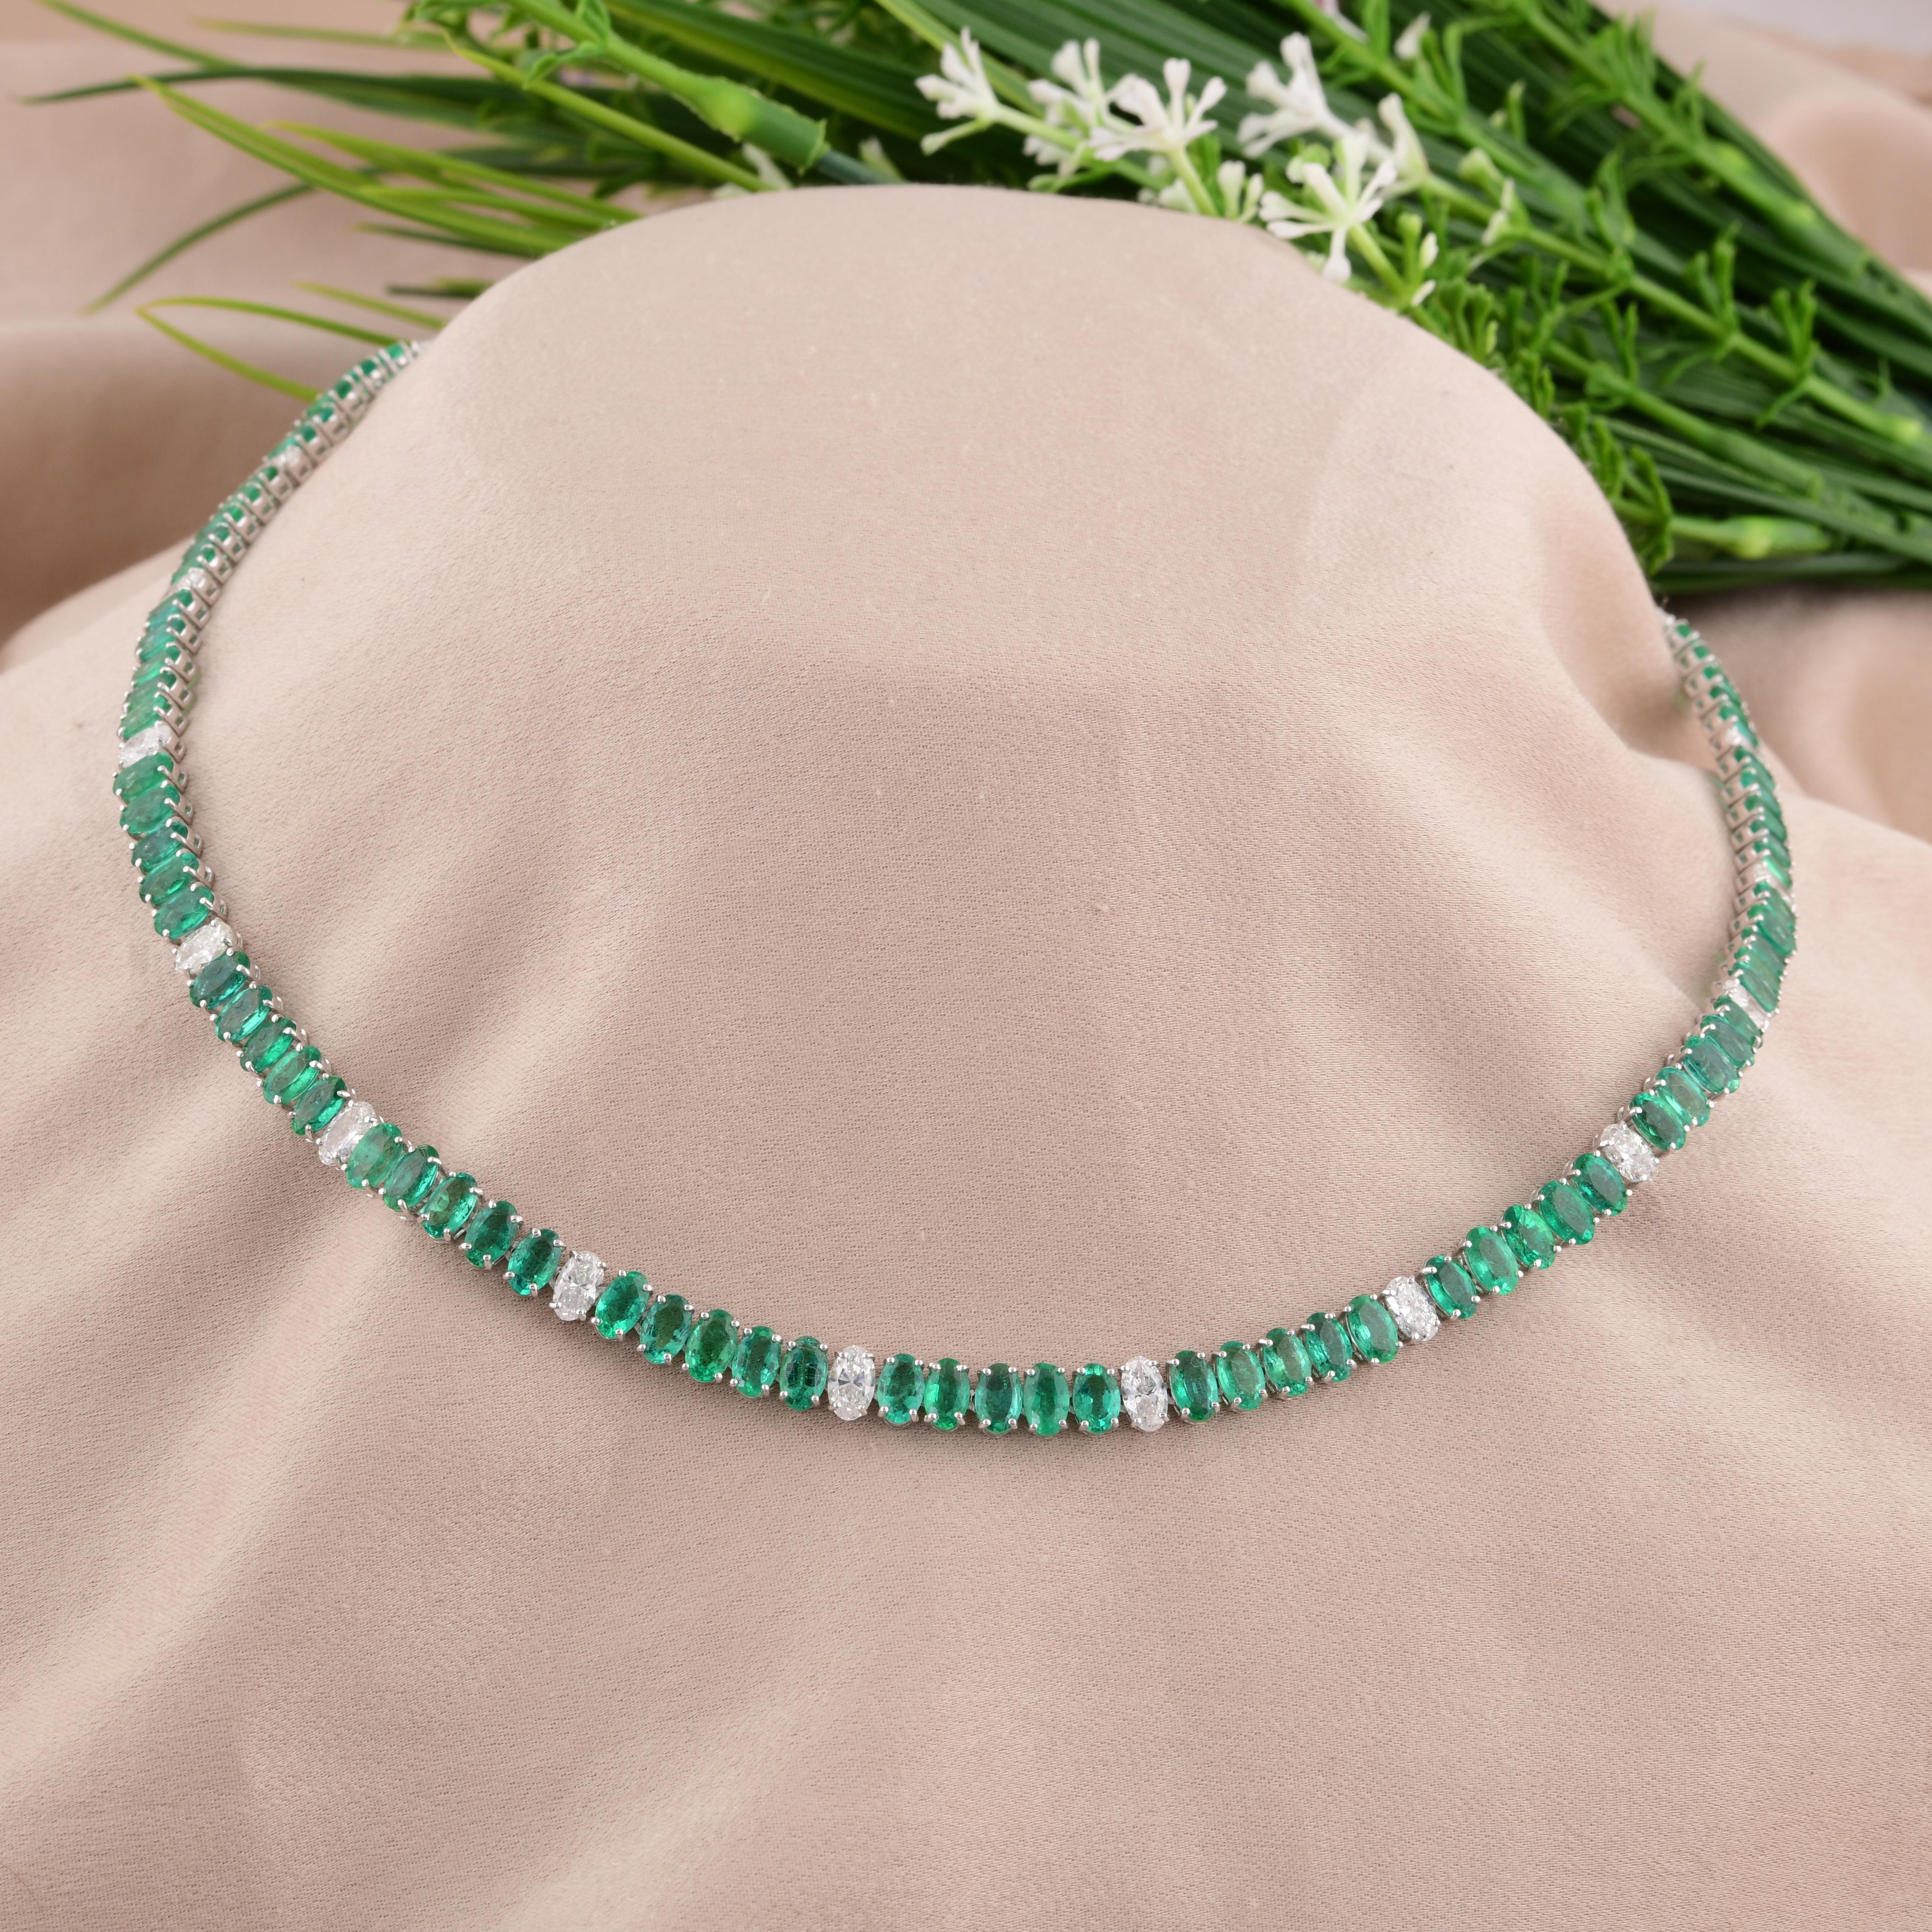 Oval Cut Oval Zambian Emerald Gemstone Necklace Diamond 18 Karat White Gold Fine Jewelry For Sale